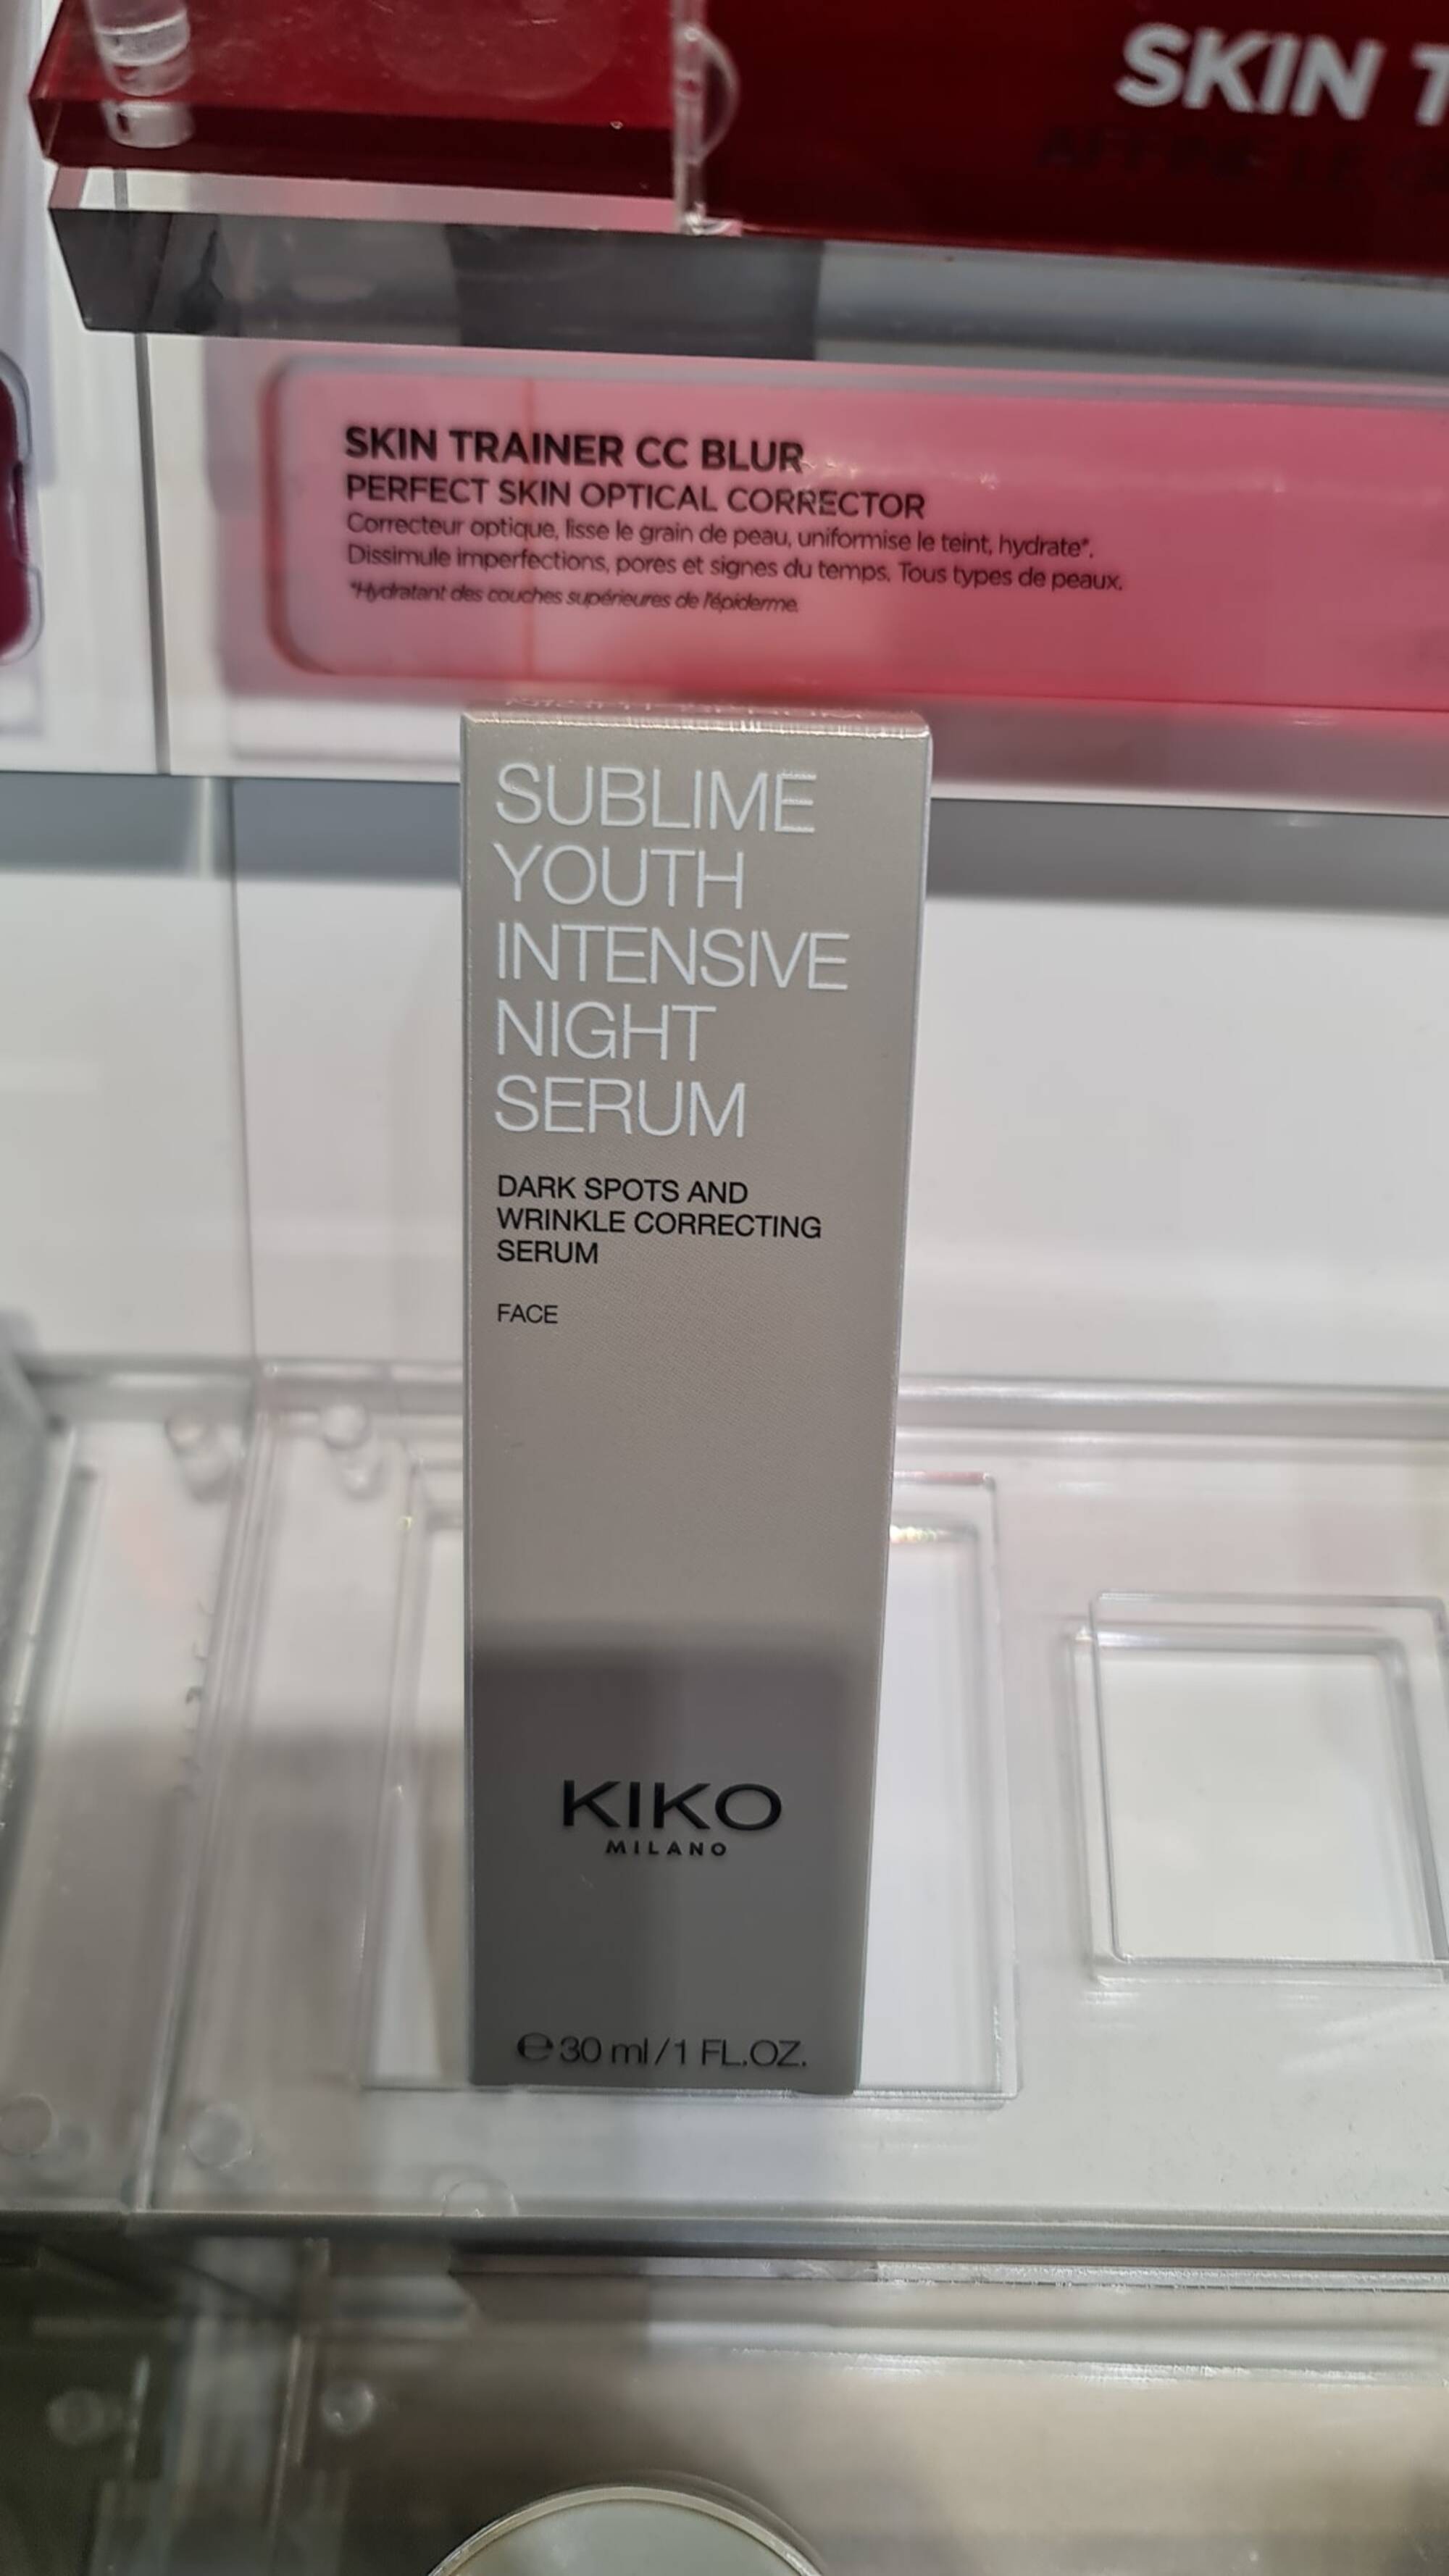 KIKO - Sublime youth intensive night serum